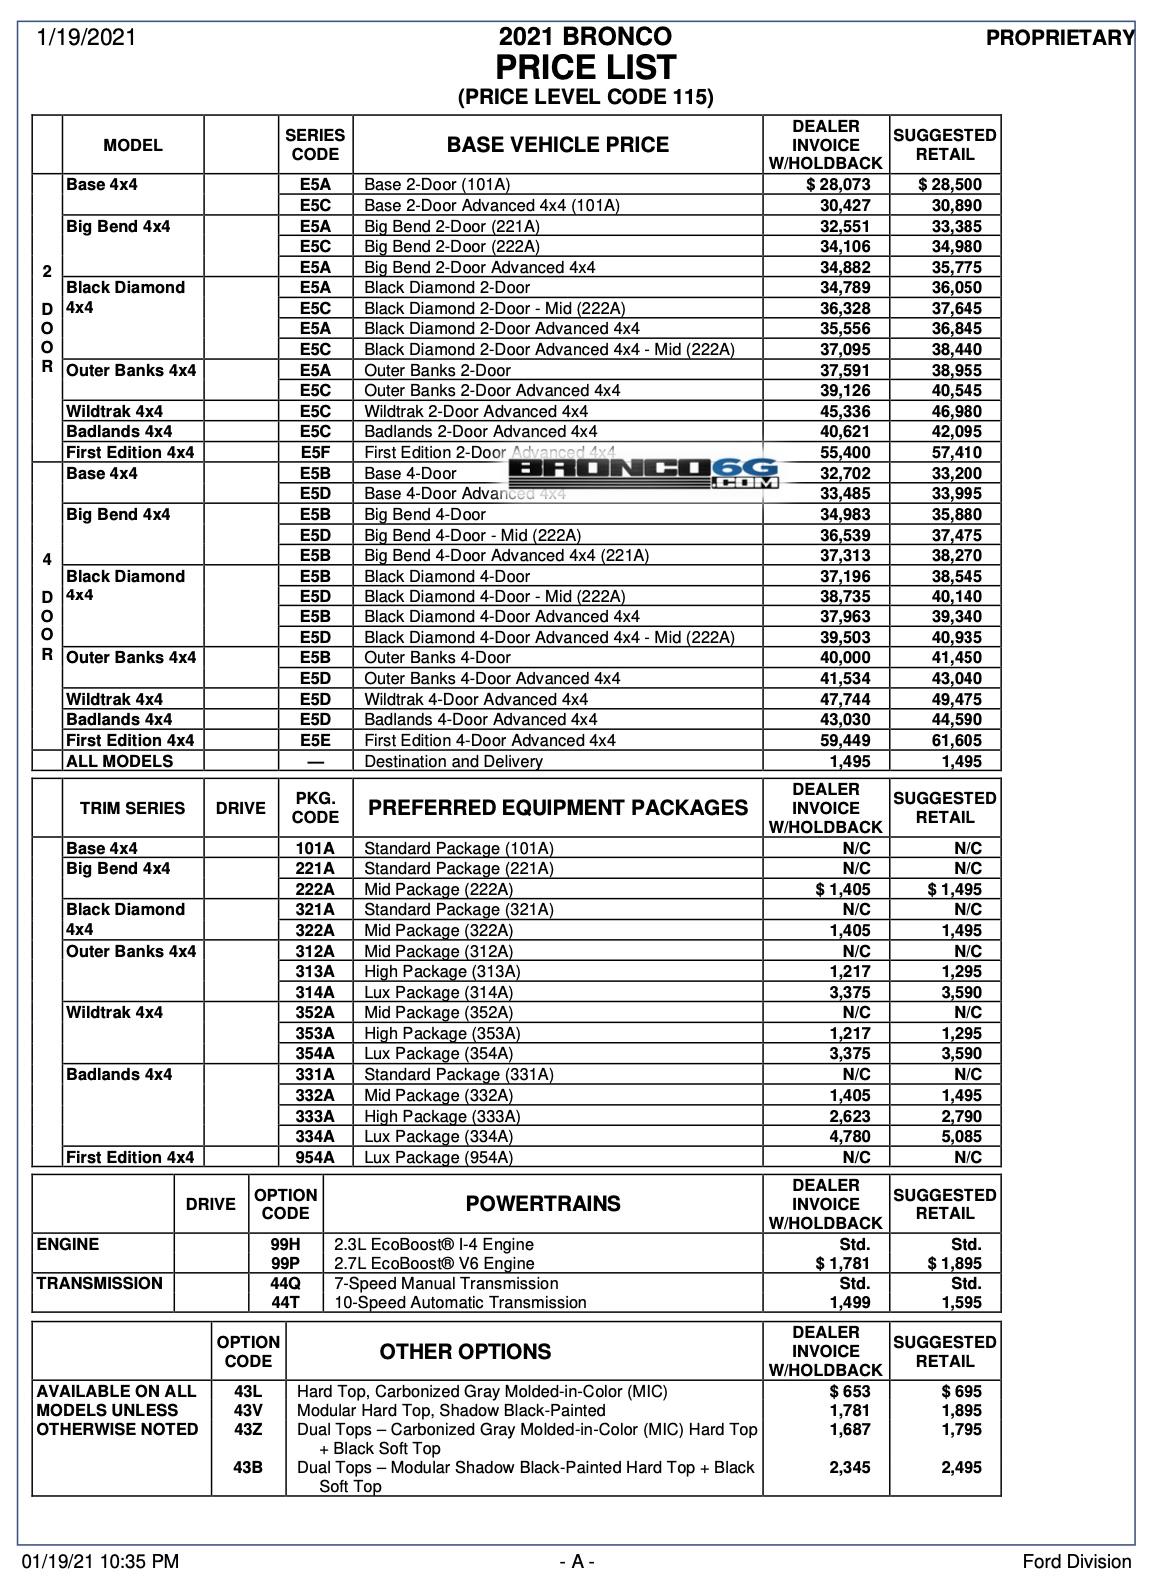 2021 Ford Bronco Invoice Price List MSRP.jpg